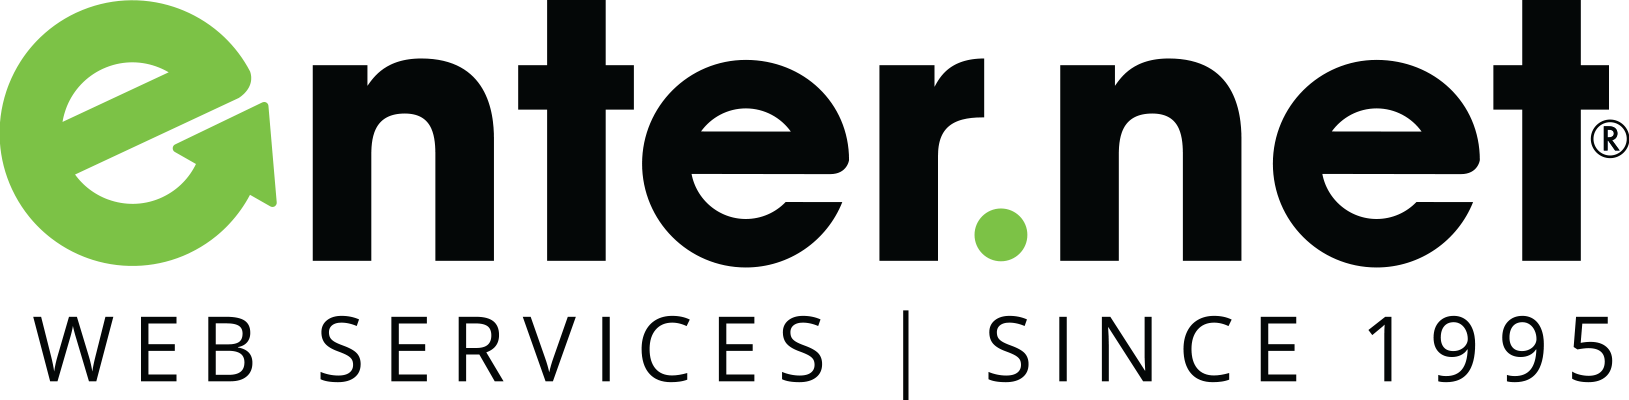 Enter.Net Video Logo